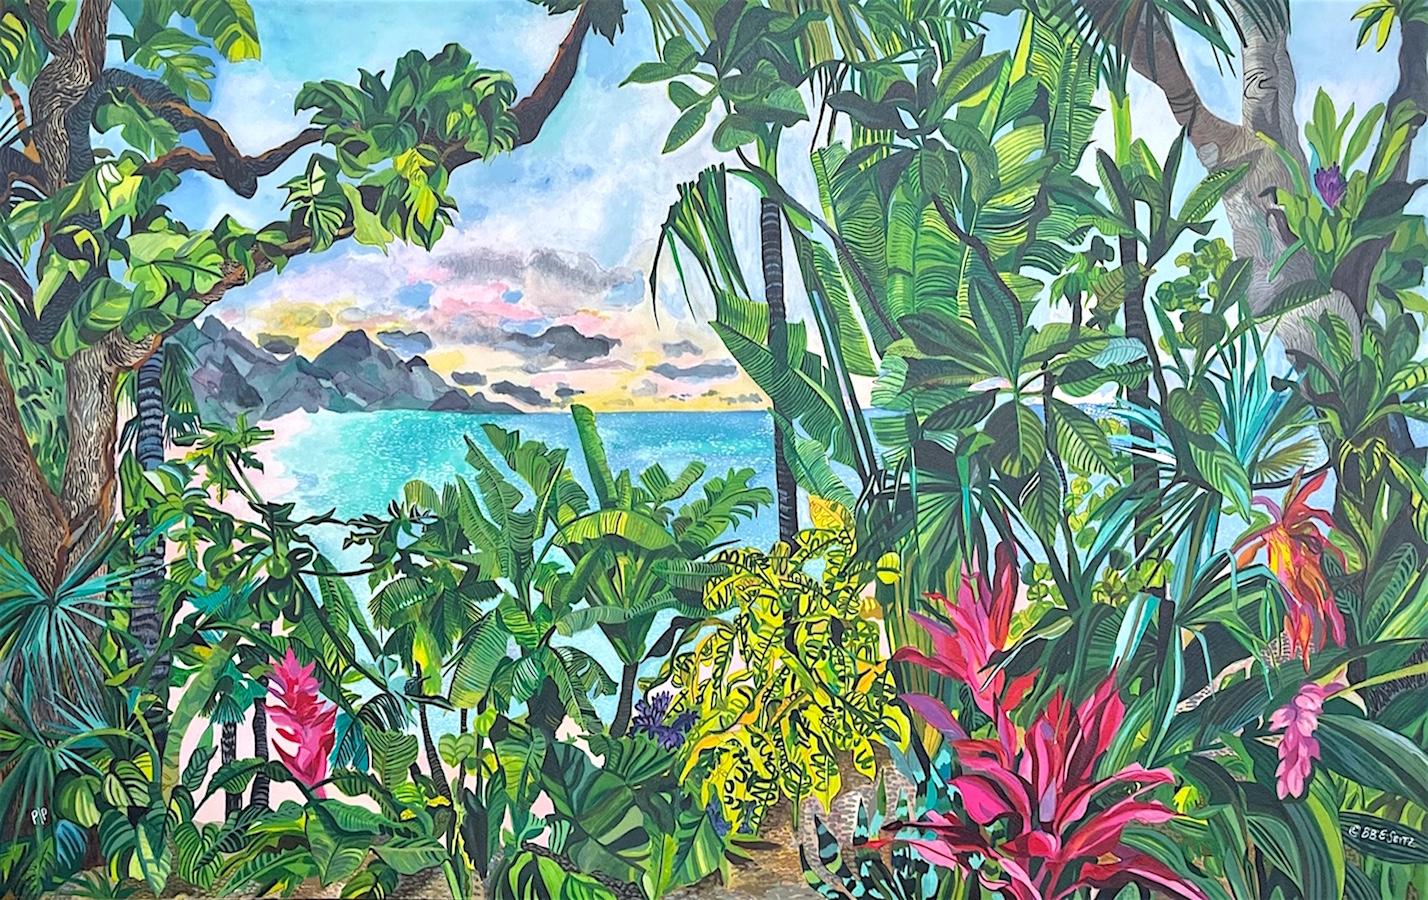 Eileen Seitz Print - BEYOND EARTHS BEAUTY Signed Lithograph, Island Landscape, Tropical Plants, Beach